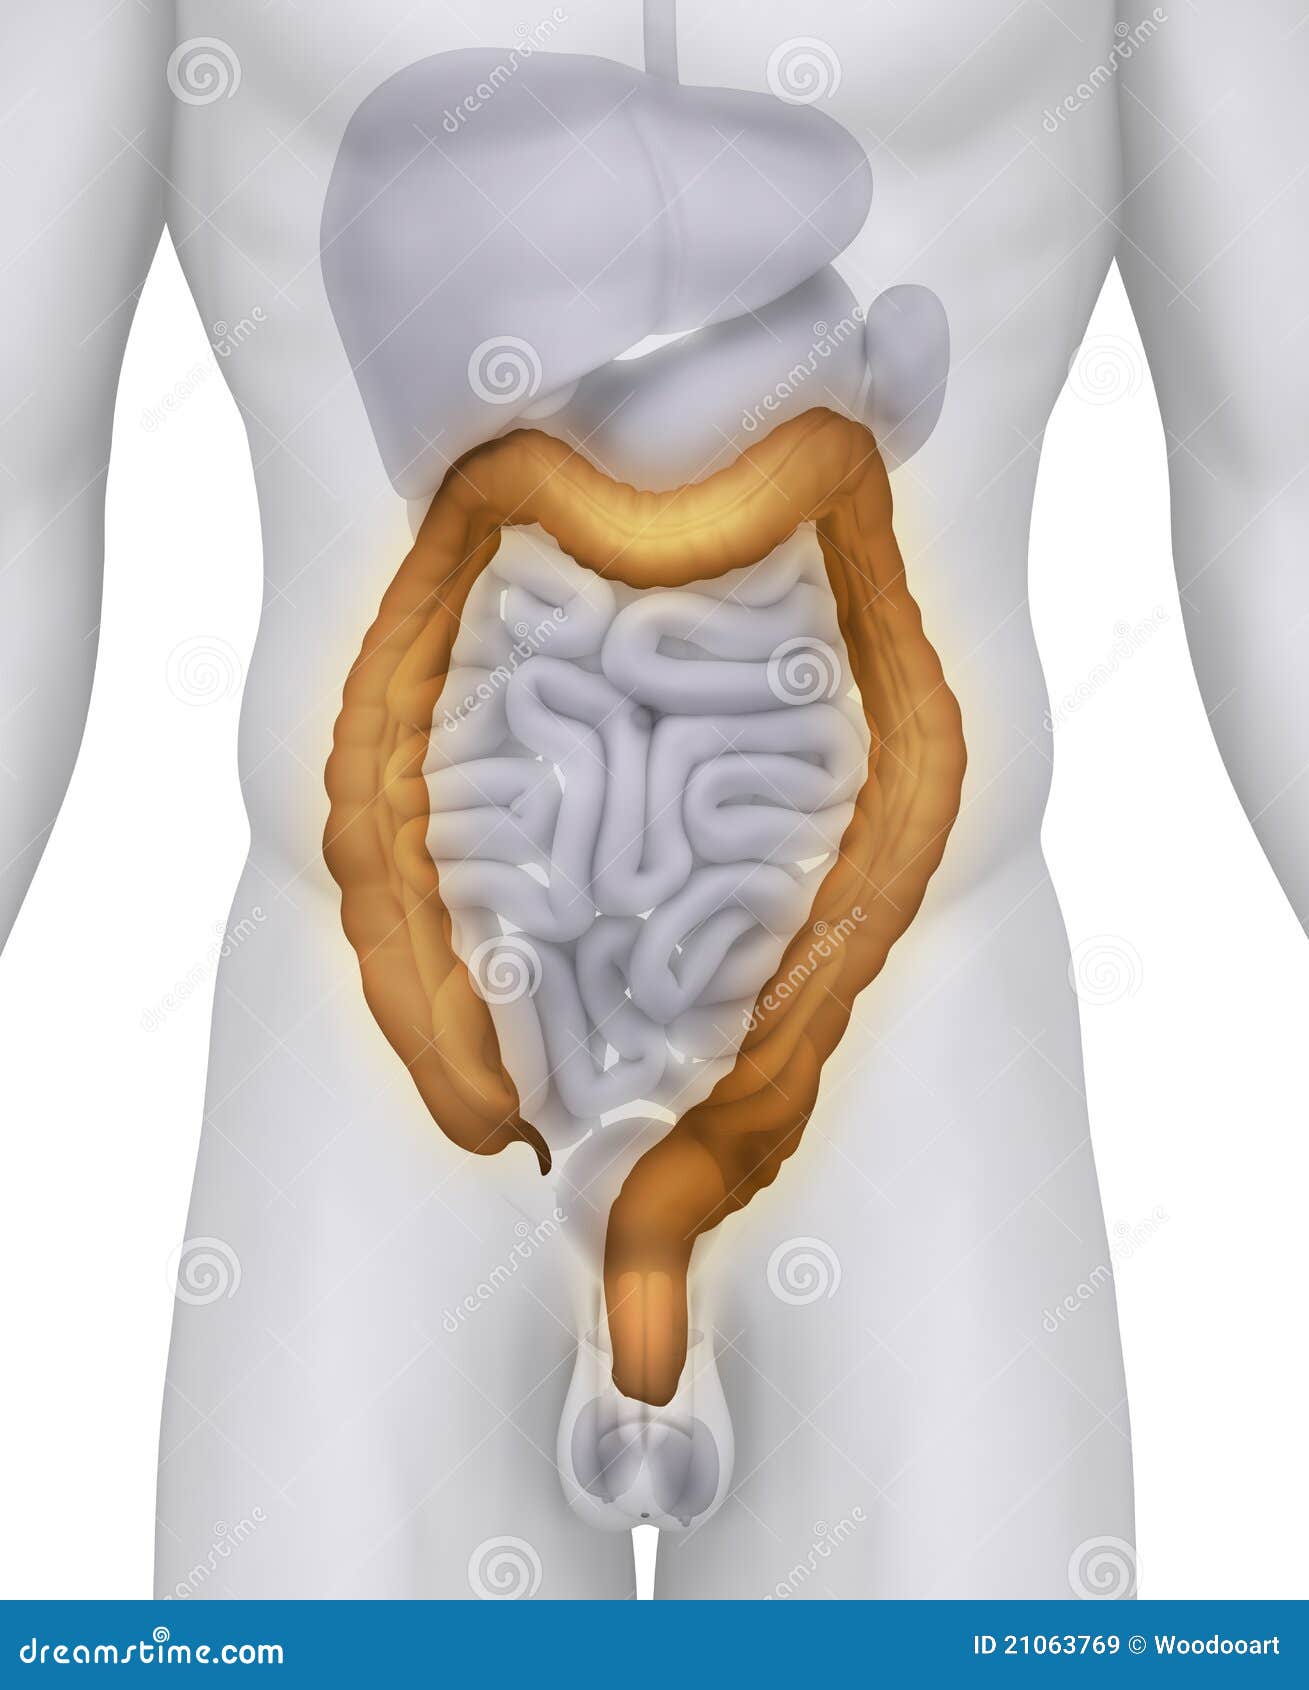 Male COLON anatomy stock illustration. Illustration of guts - 21063769